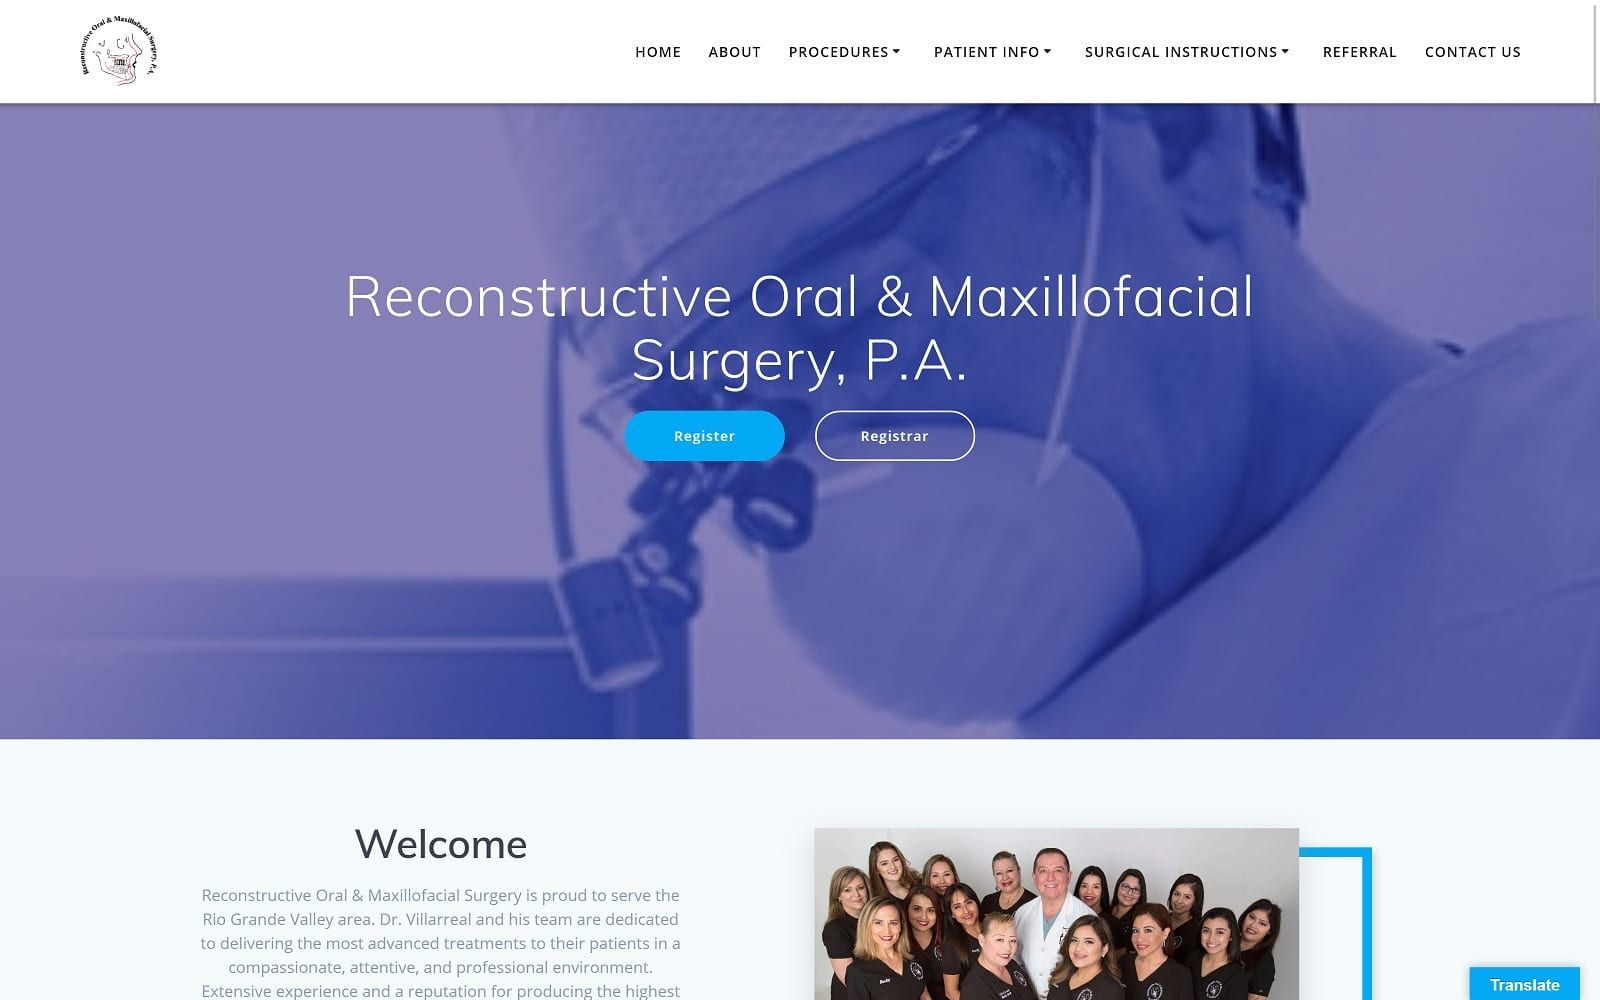 The screenshot of reconstructive oral & maxillofacial surgery reconstructiveoralandmaxillofacial. Com website